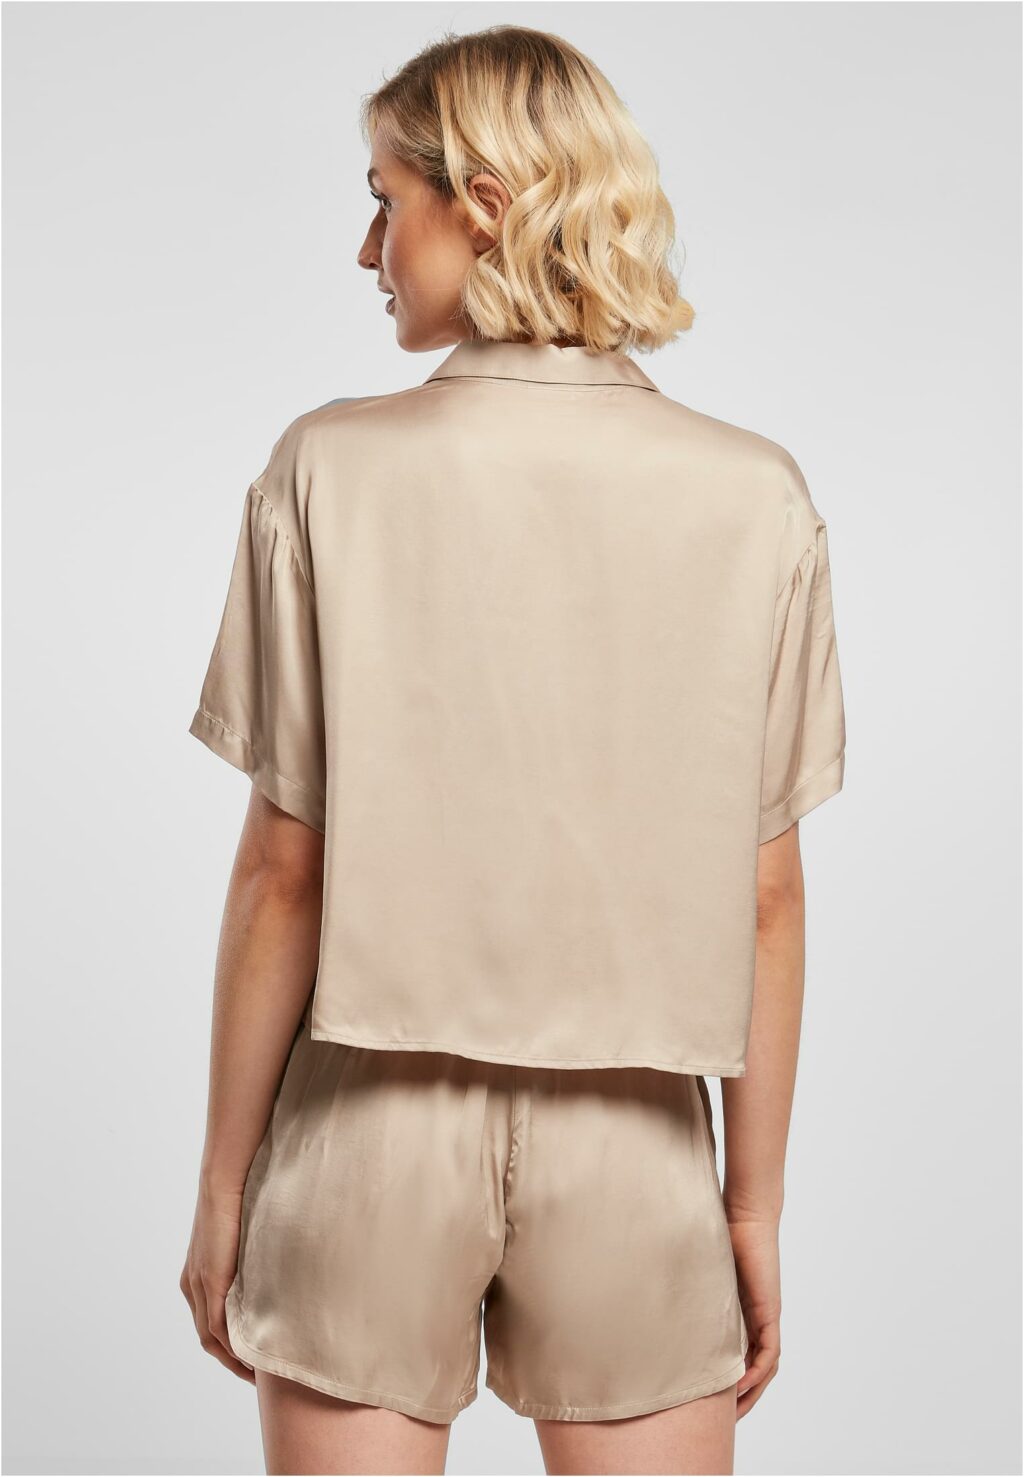 Urban Classics Ladies Viscose Satin Resort Shirt softtaupe TB5009